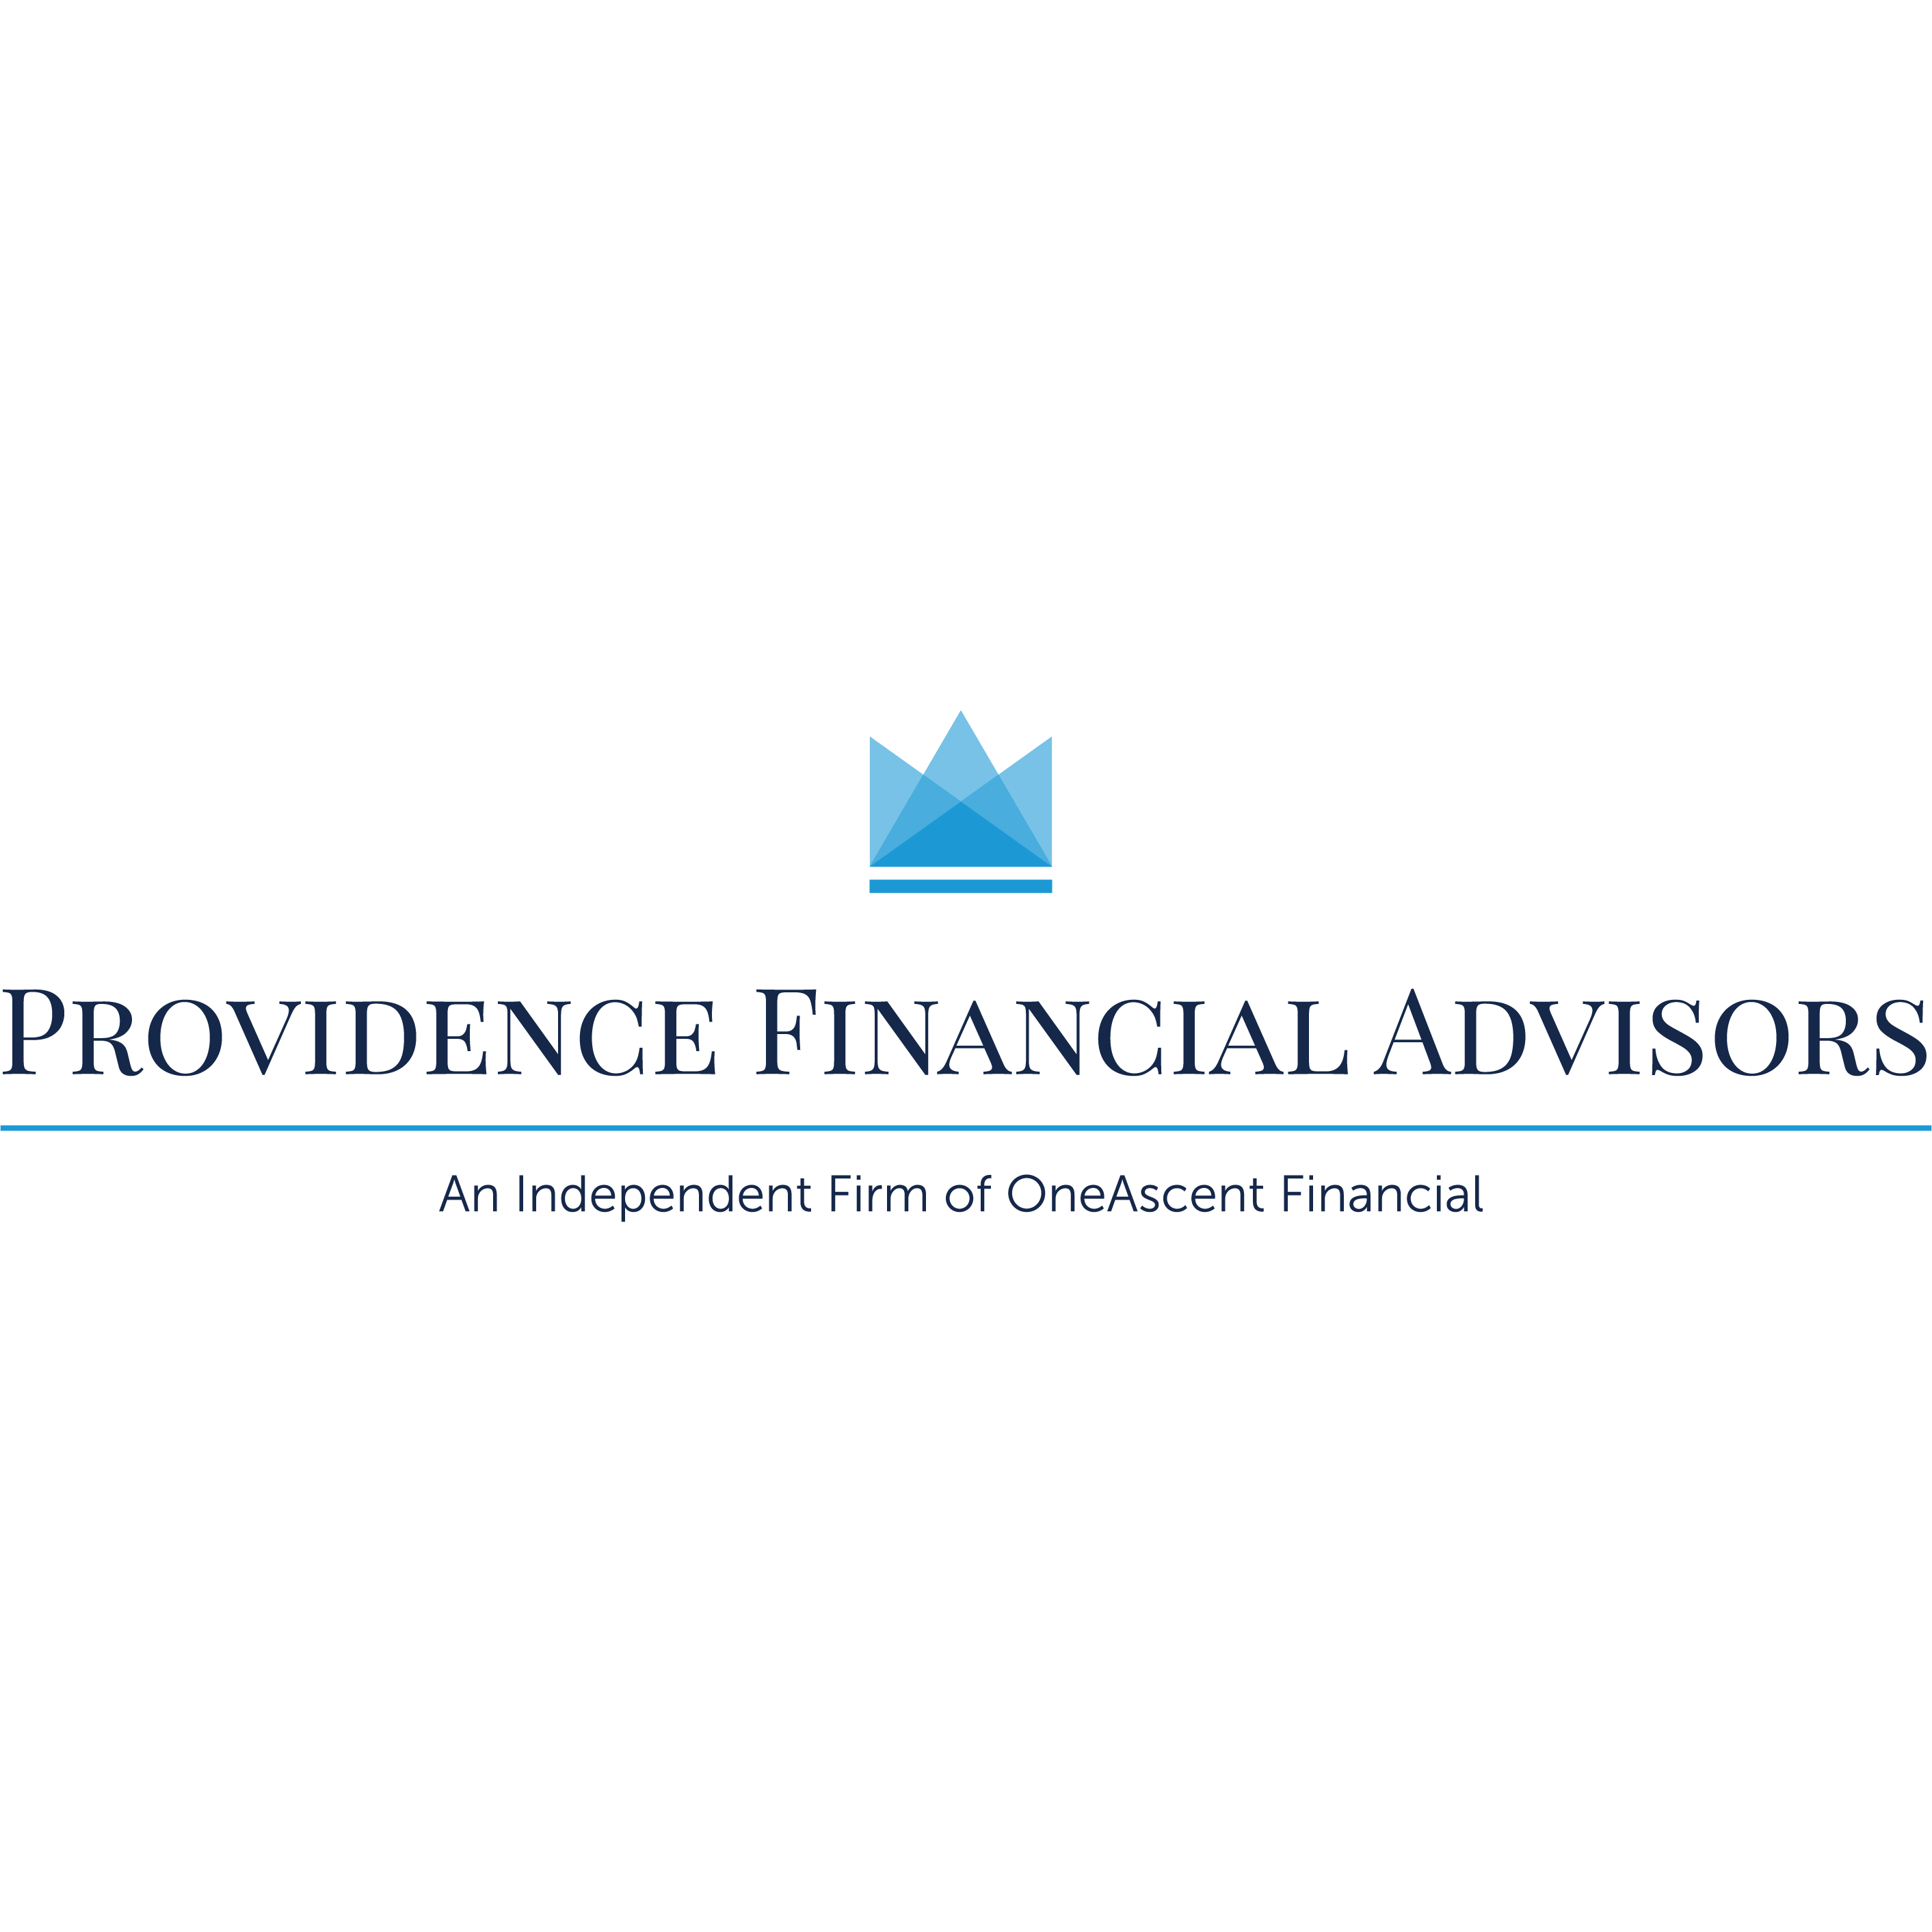 Providence Financial Advisors